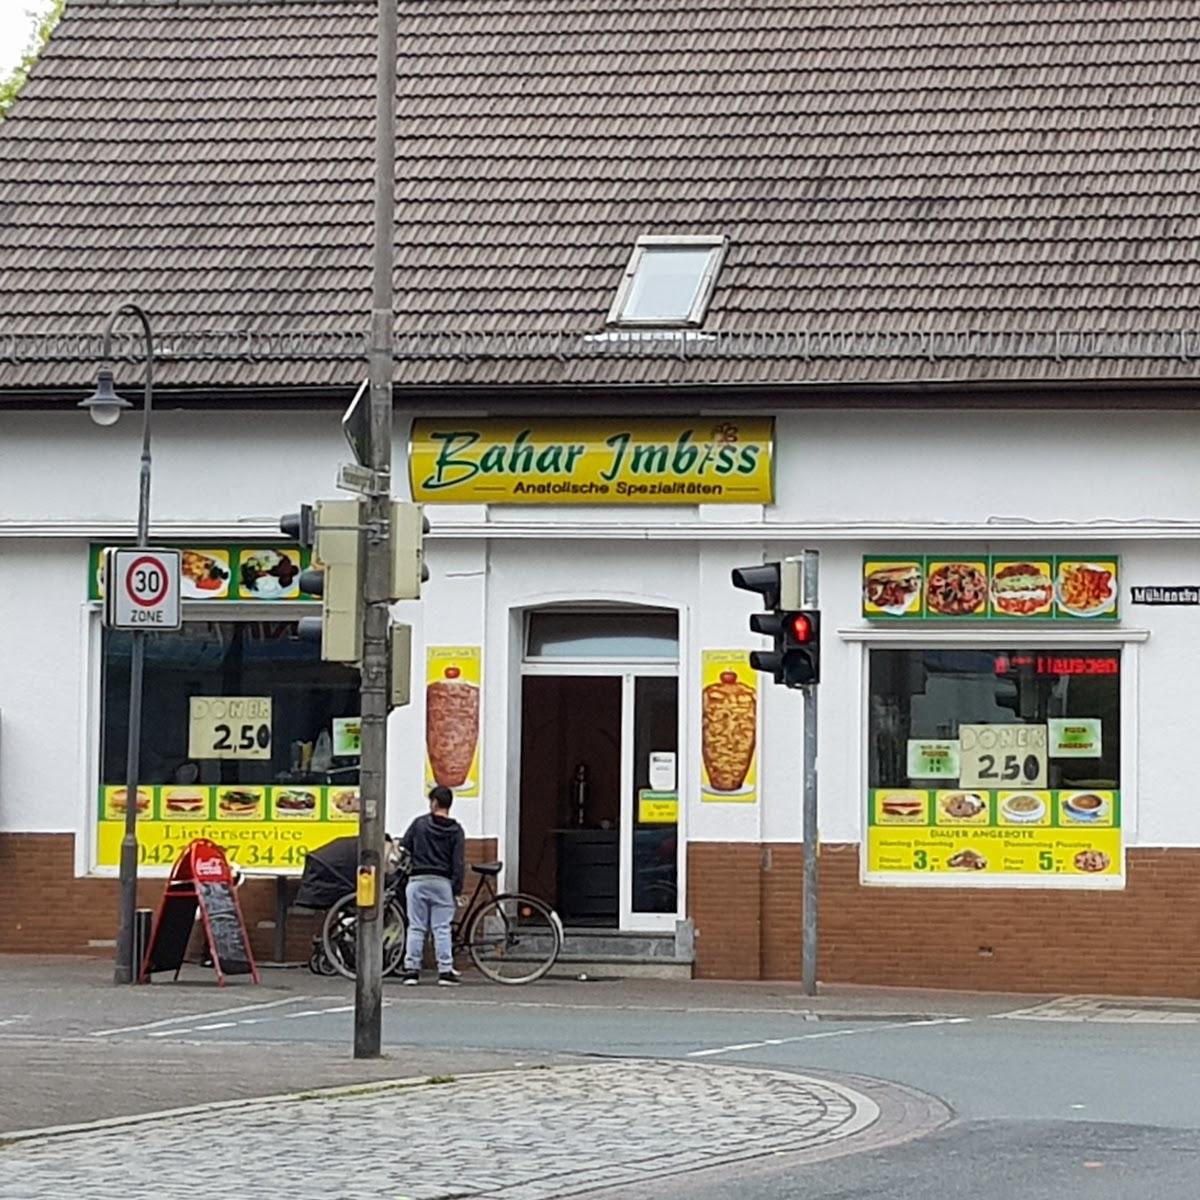 Restaurant "Bahar Imbiss" in Bremen